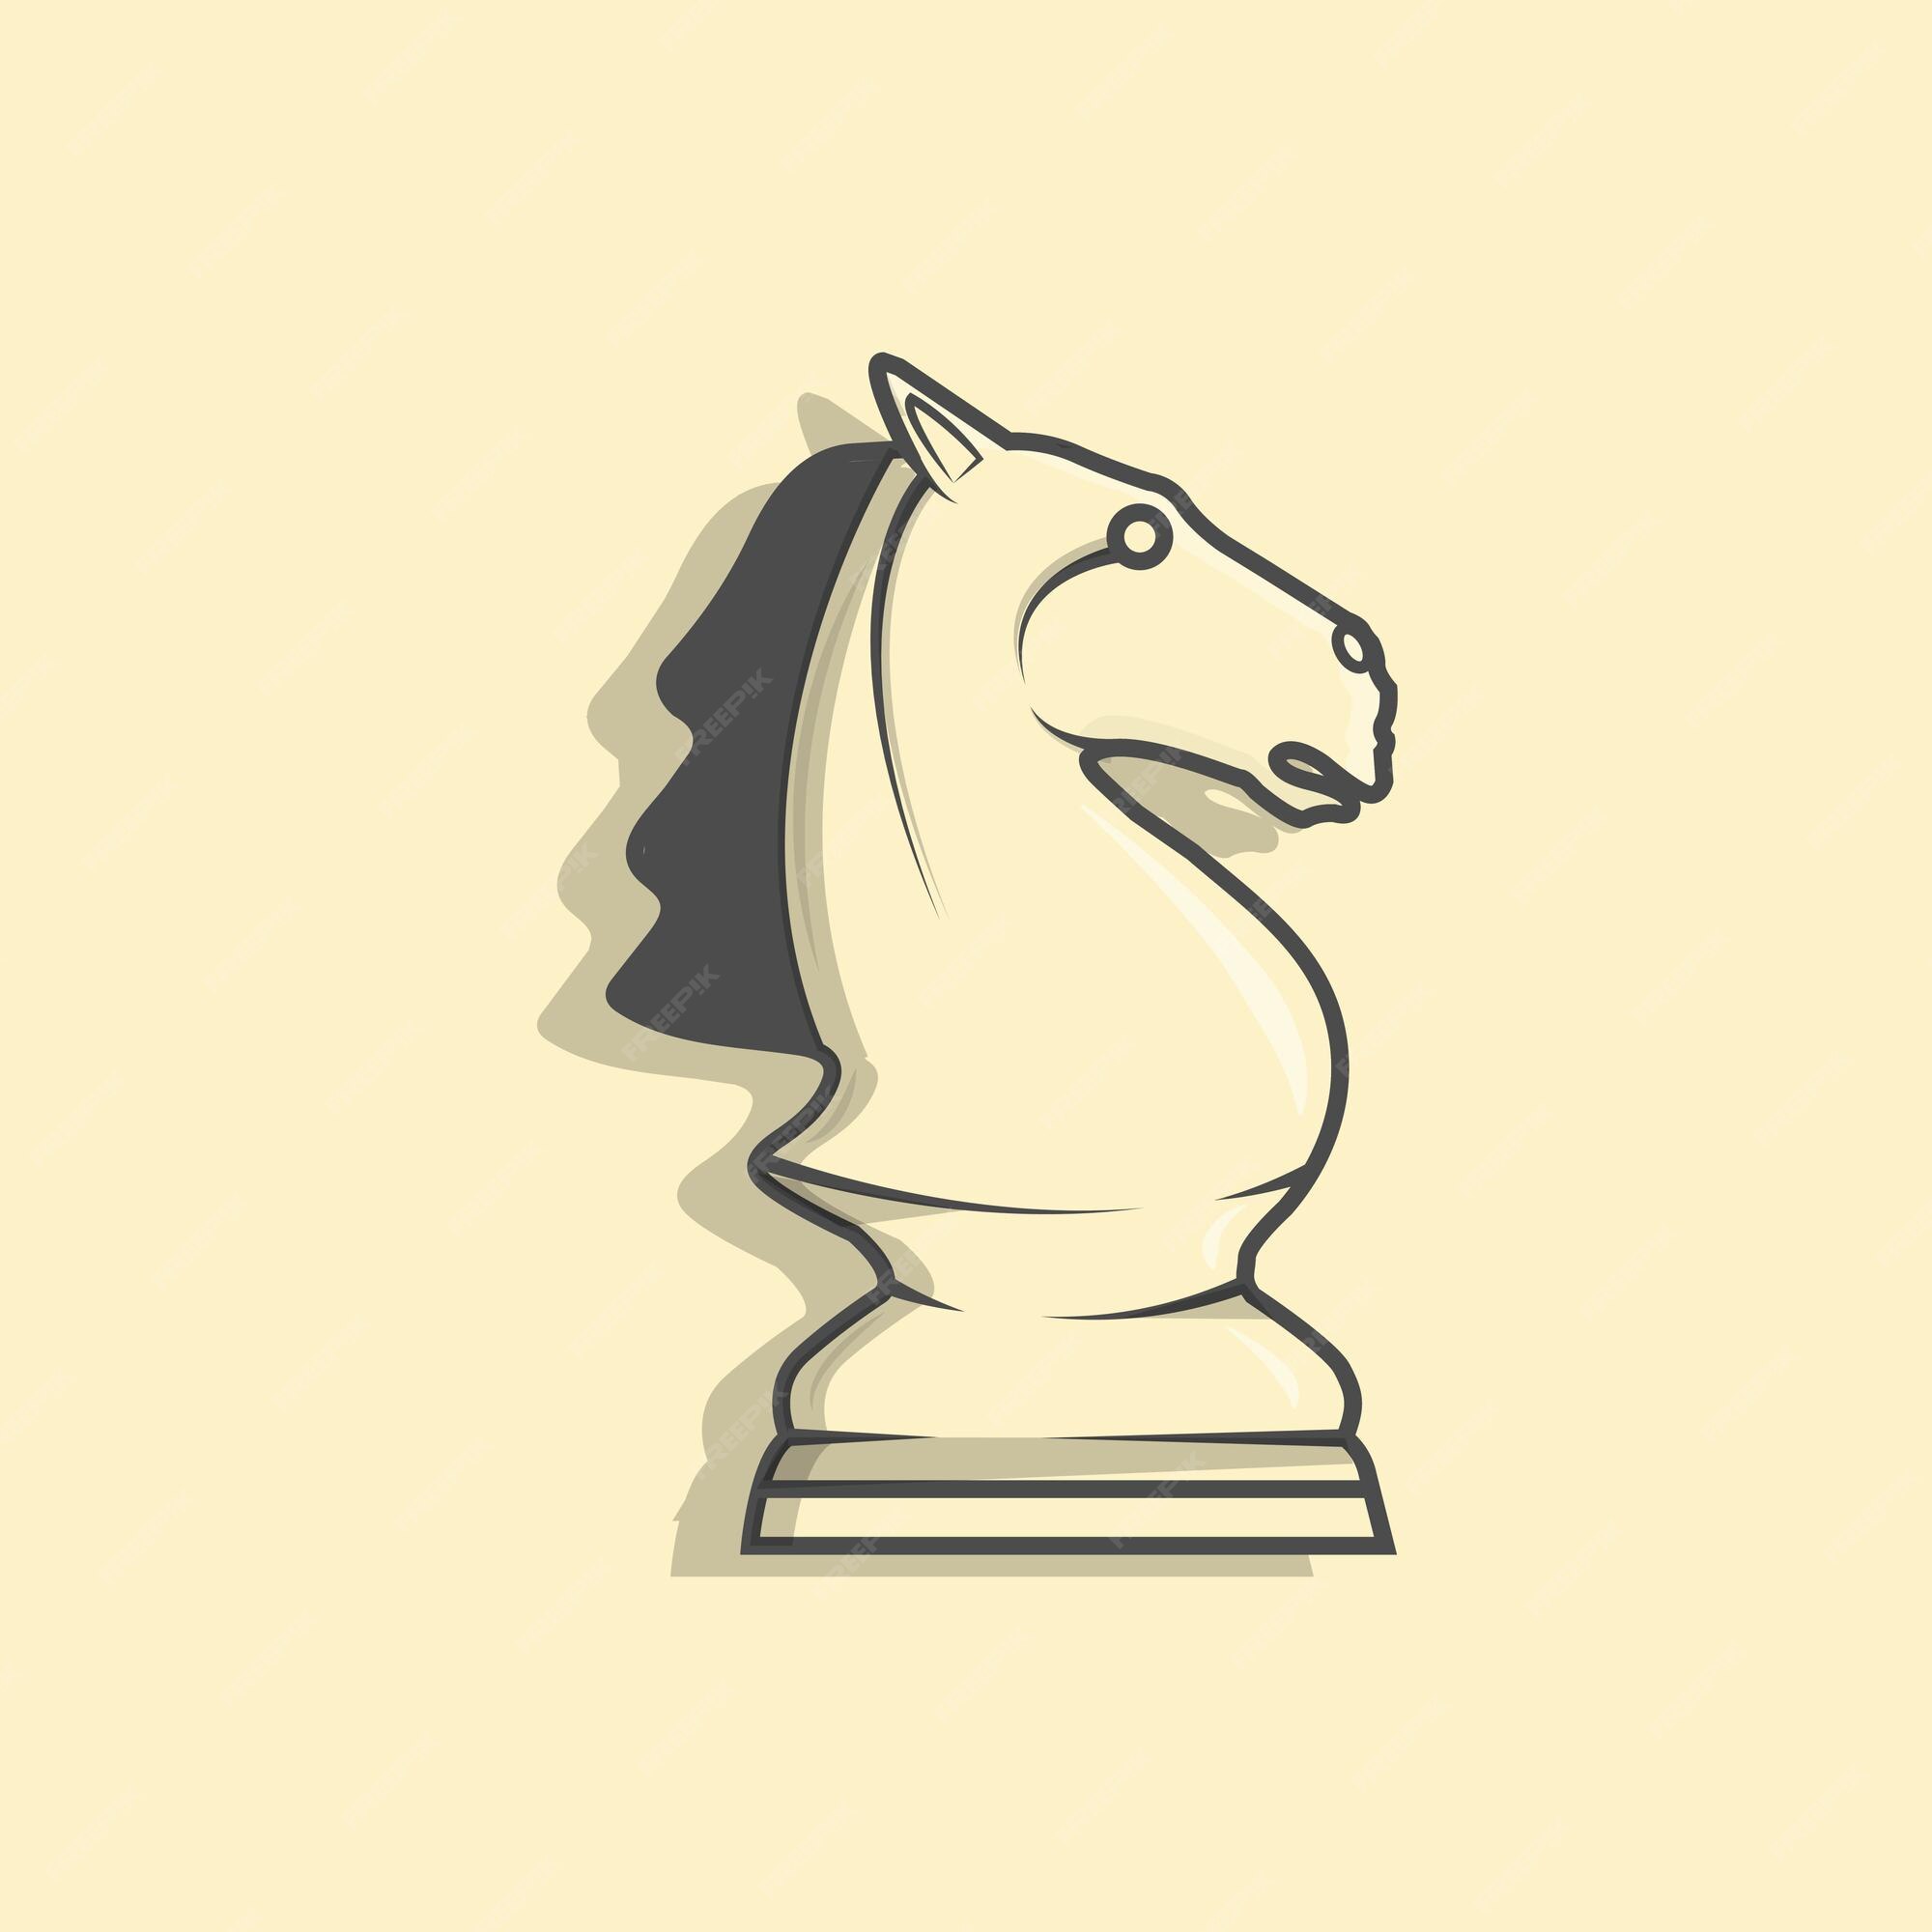 Cavalo Xadrez Cavaleiro Desenho Animado Contorno Isolado Fundo Branco  Mascote imagem vetorial de veleri© 409782034